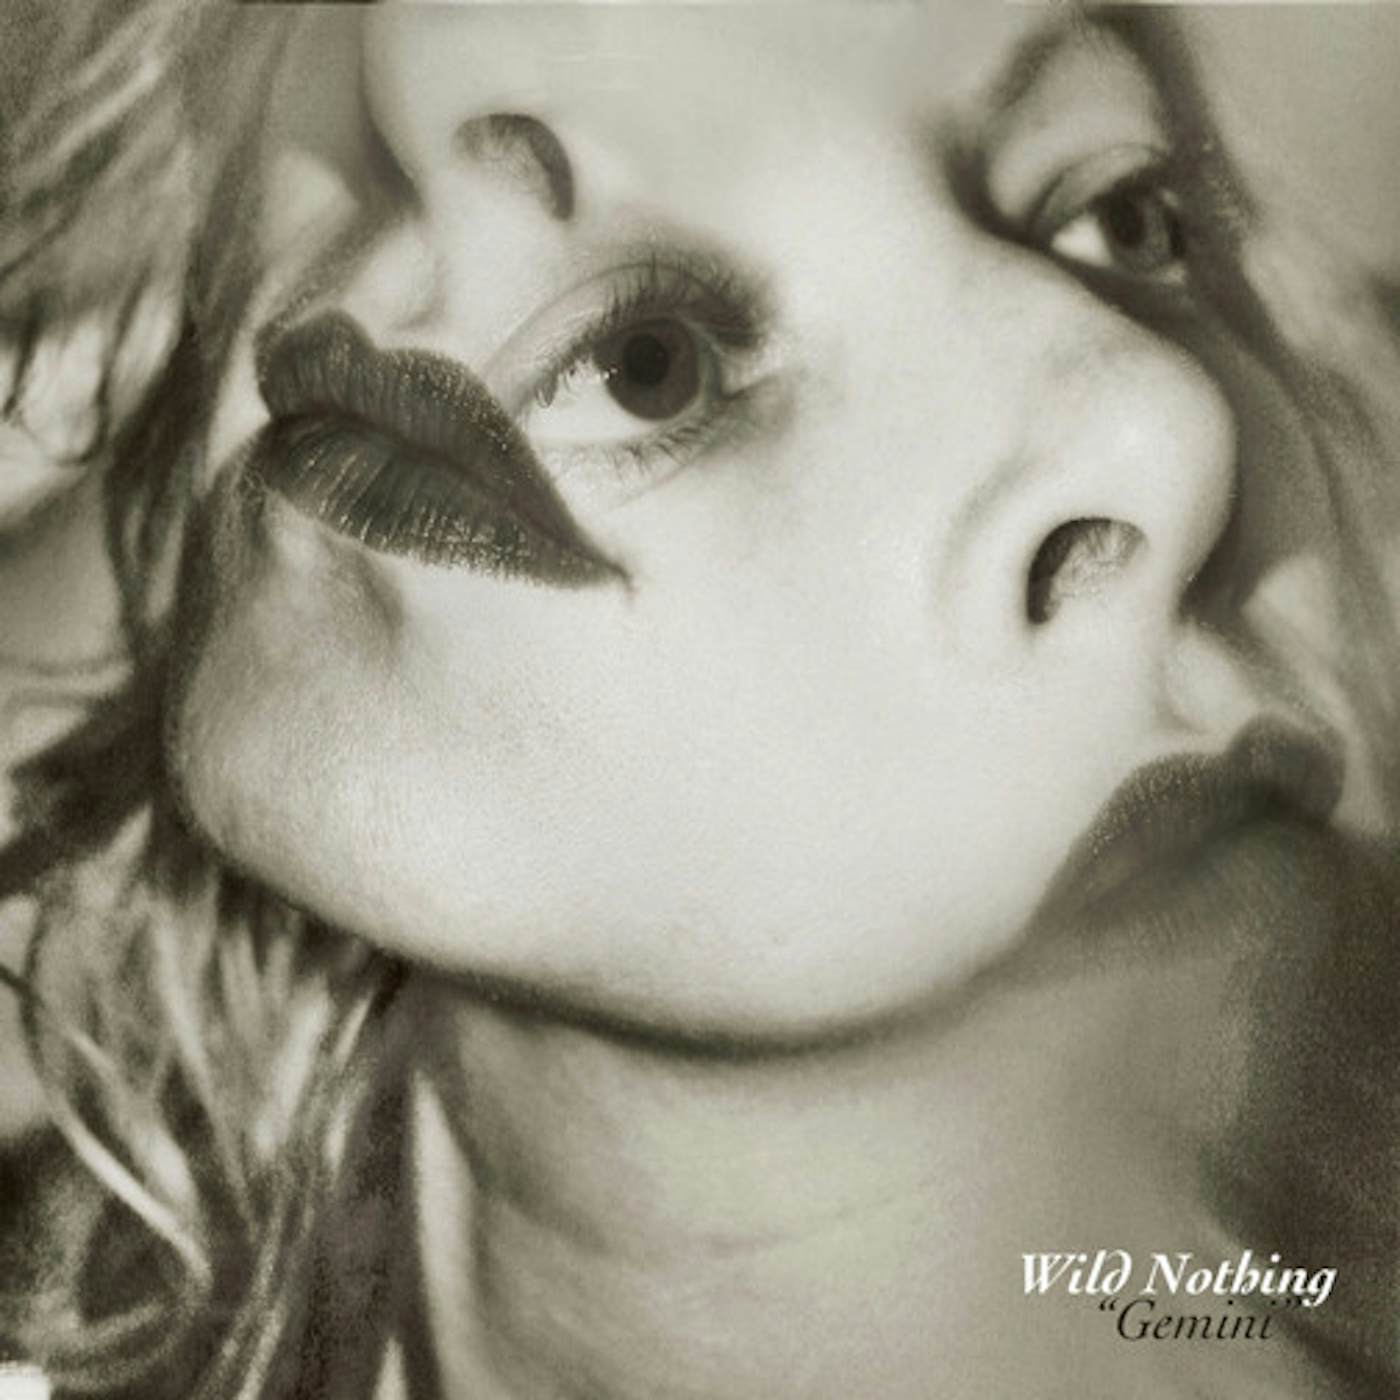 Wild Nothing Gemini Vinyl Record